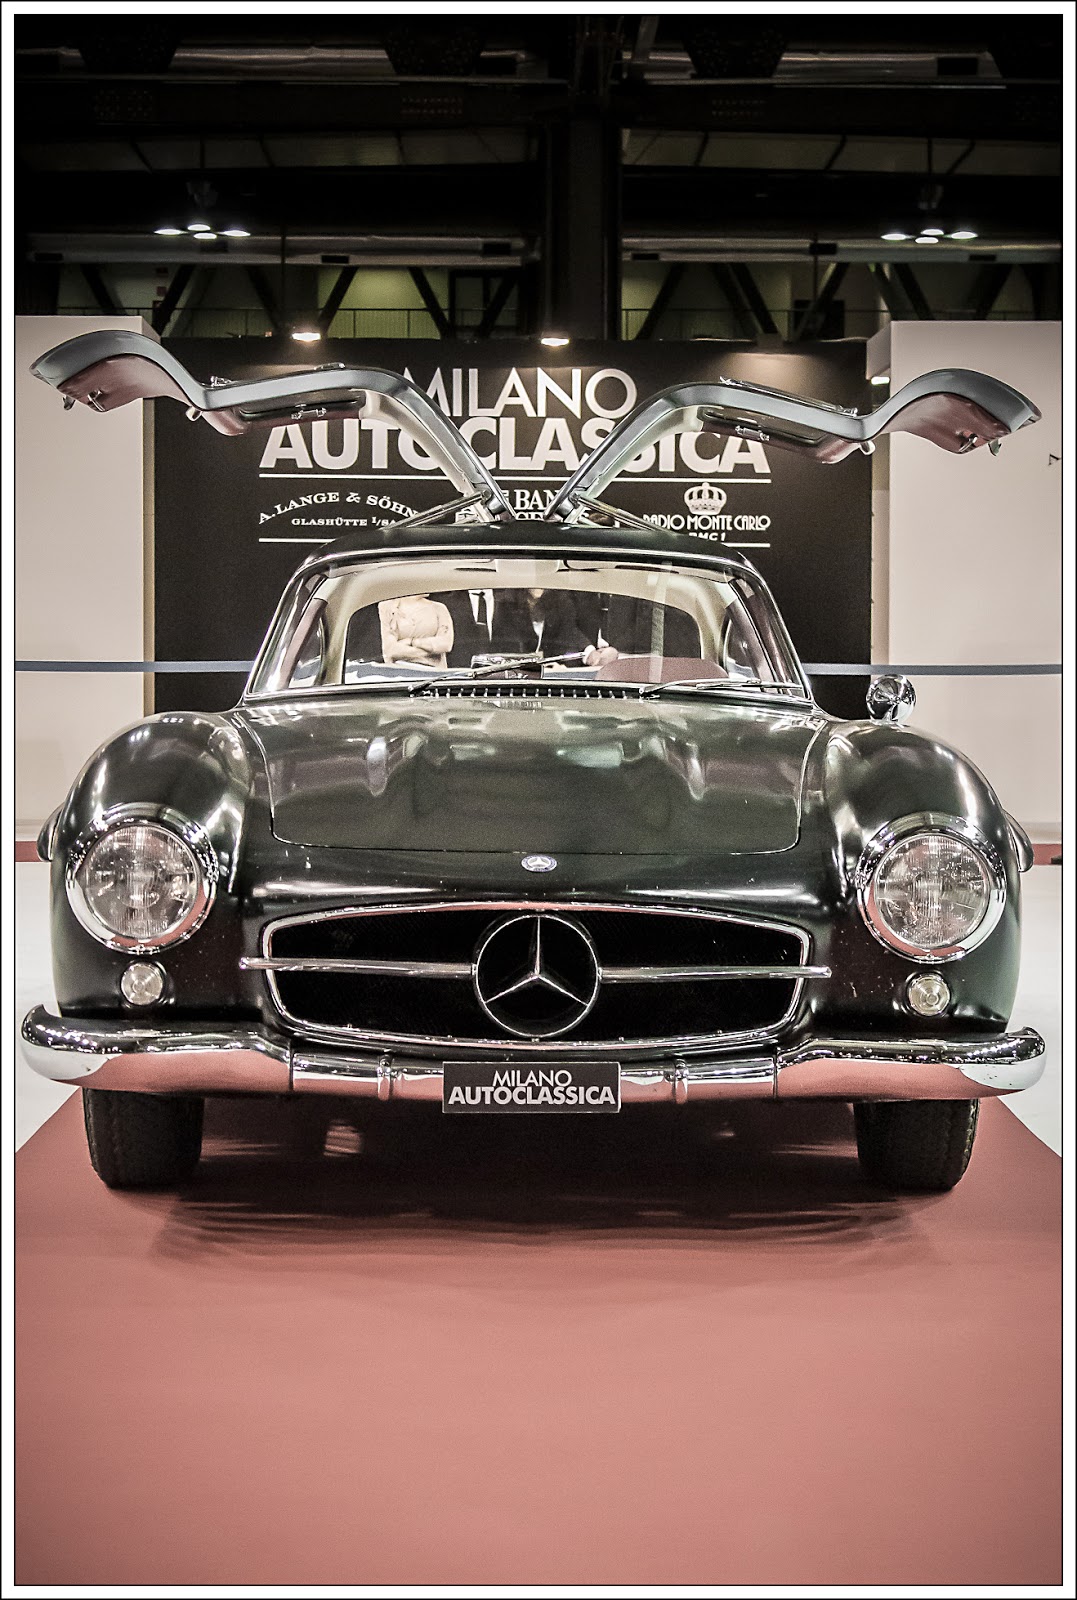 Milano AutoClassica 2014